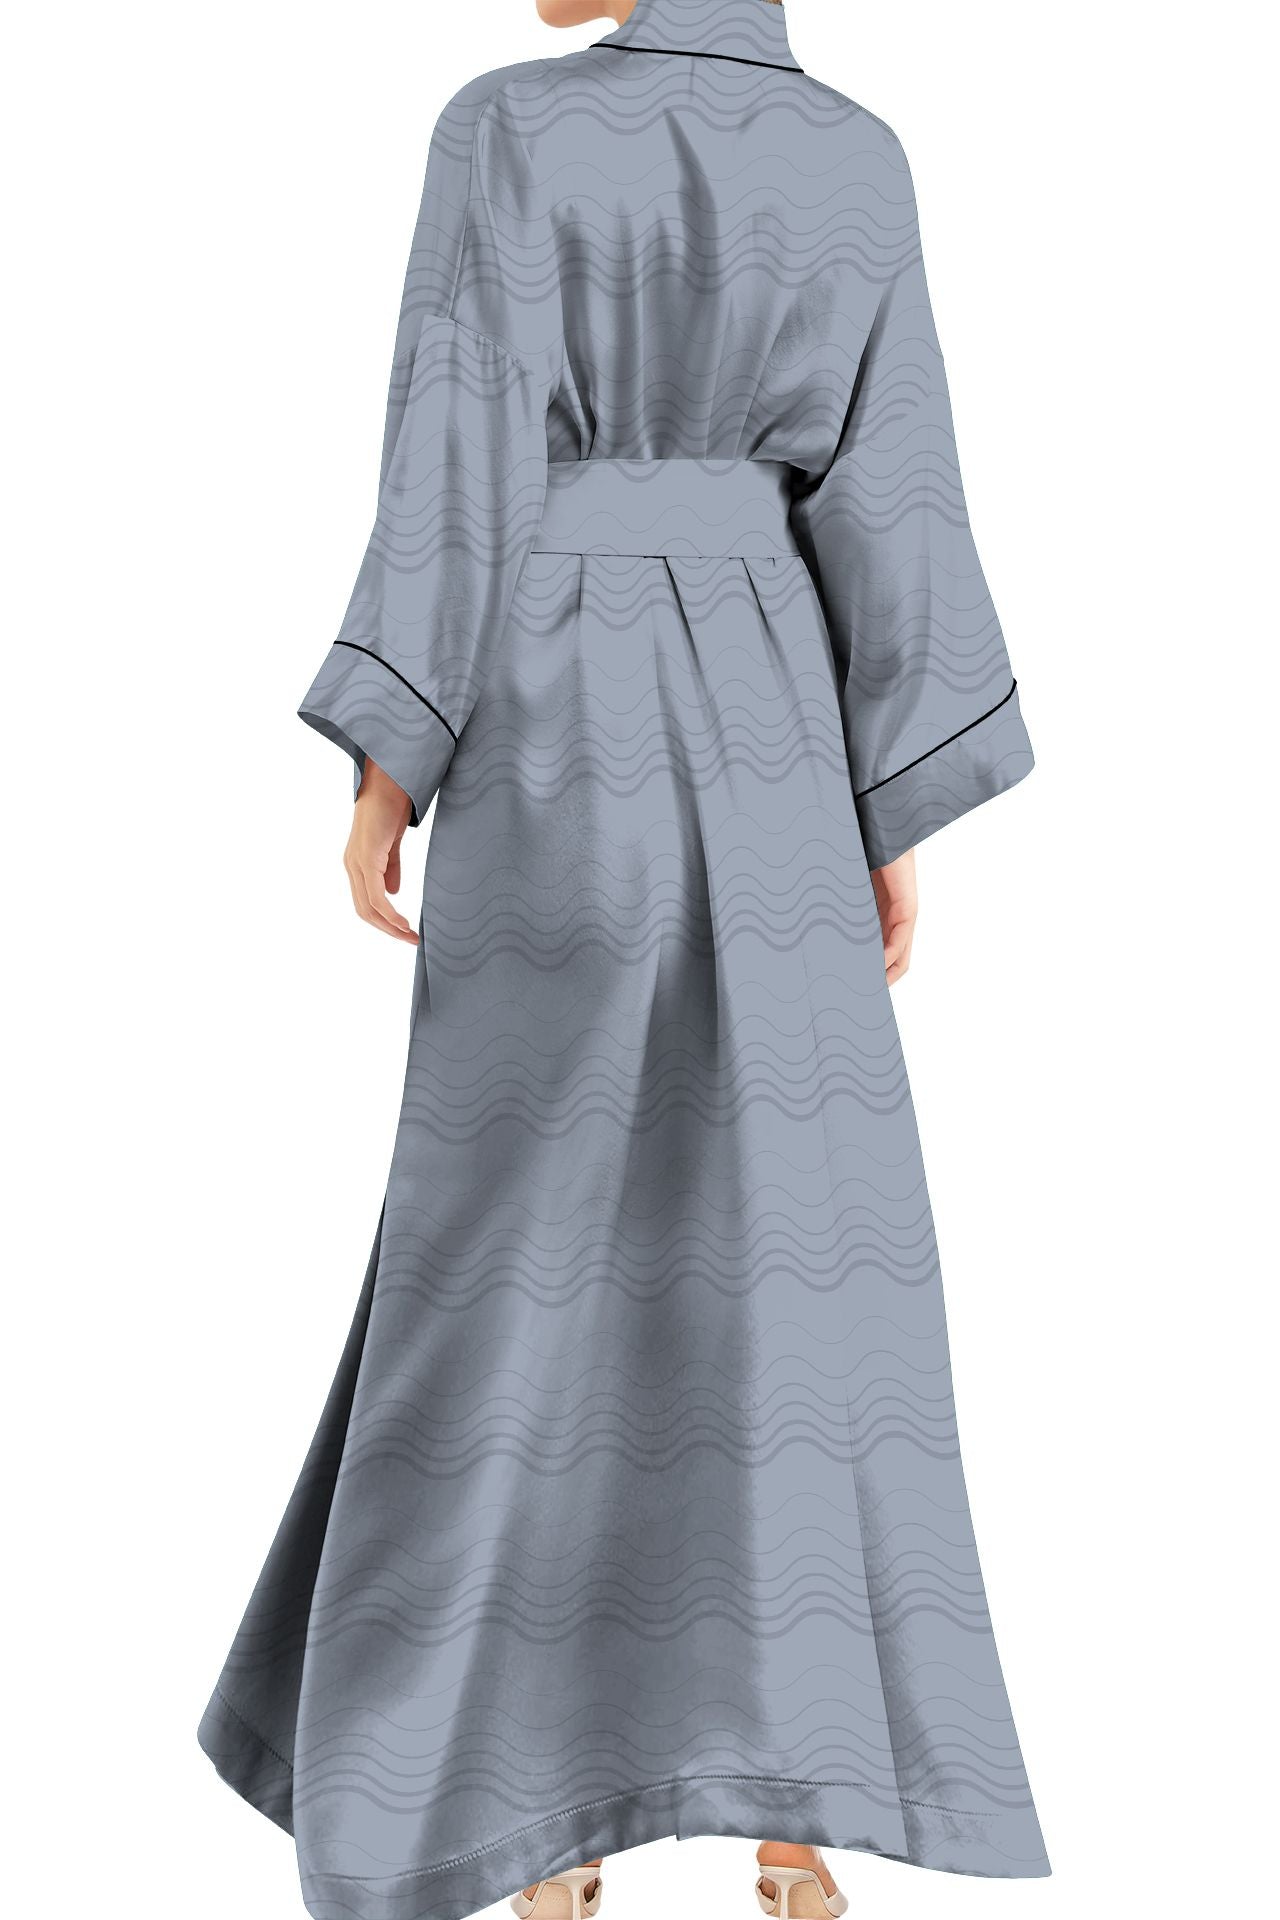 "womens gray robe" "Kyle X Shahida" "silk robes and kimonos" "luxury kimono"